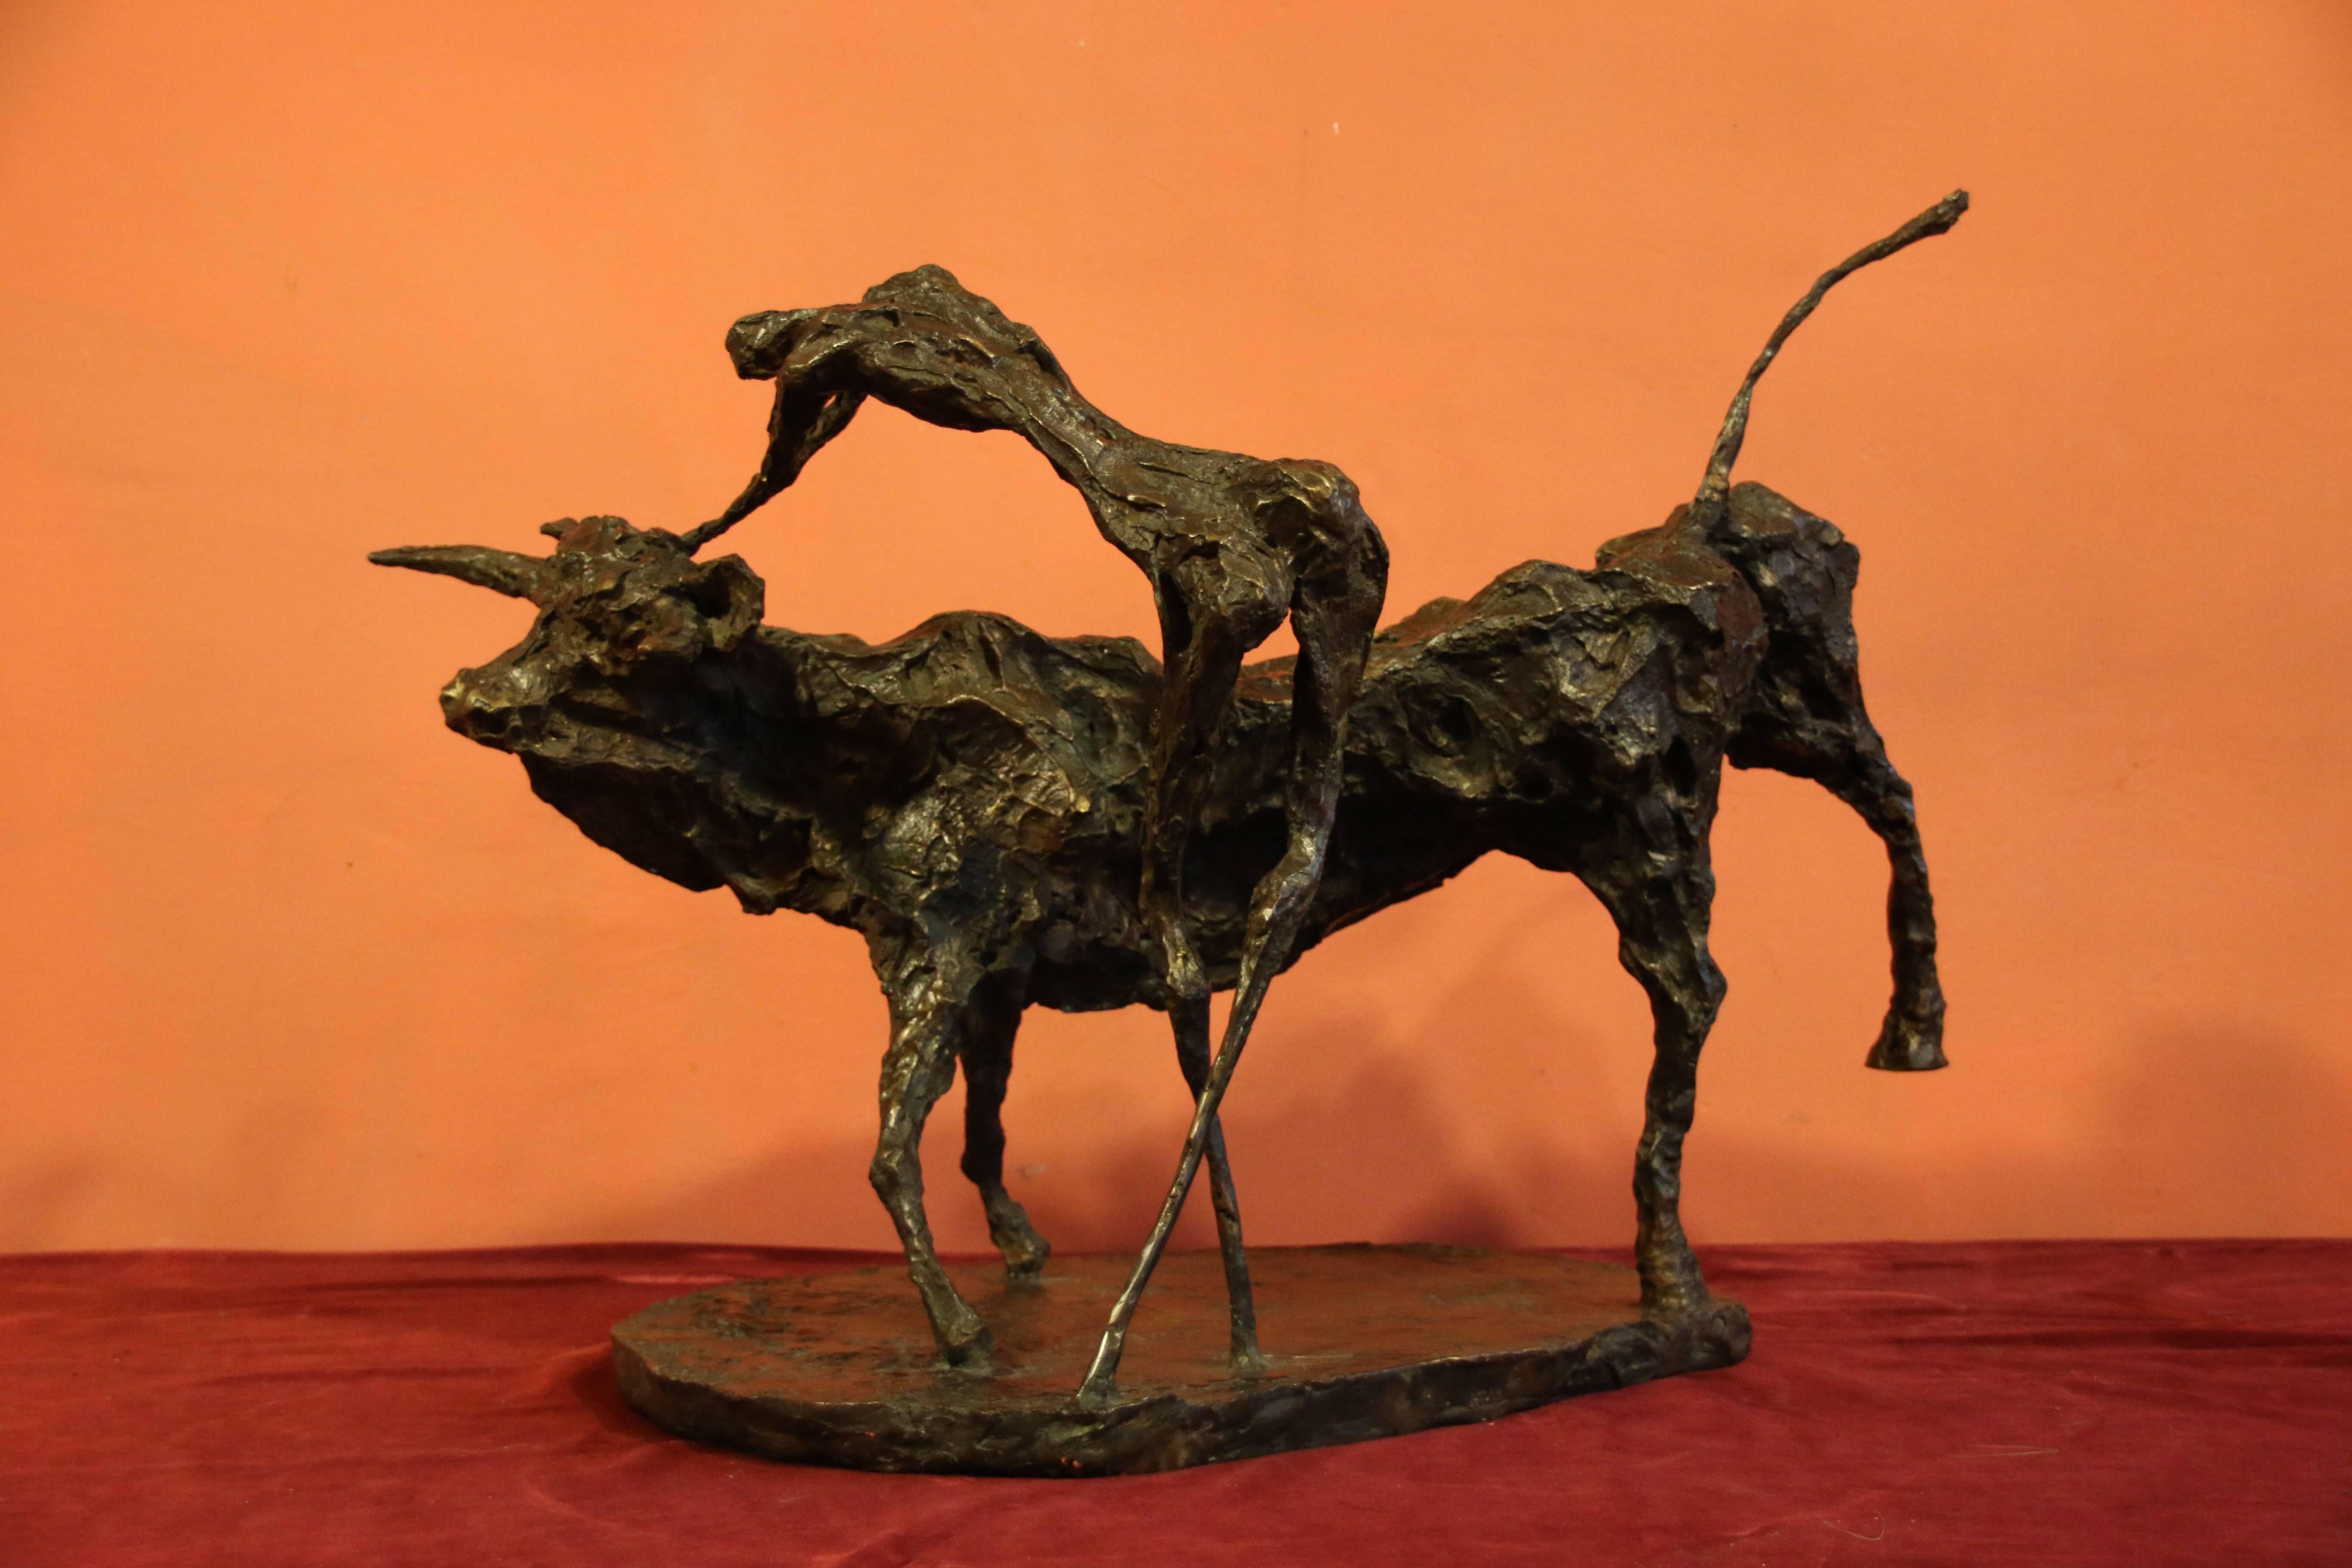 Magdalena Reinharez (1925 – 2012)

Bronze sculpture 1/8
Carved by the artist
Signed: M. Reinharez
Foundry mark: Chapon

Exhibitions:
2007
Salon 